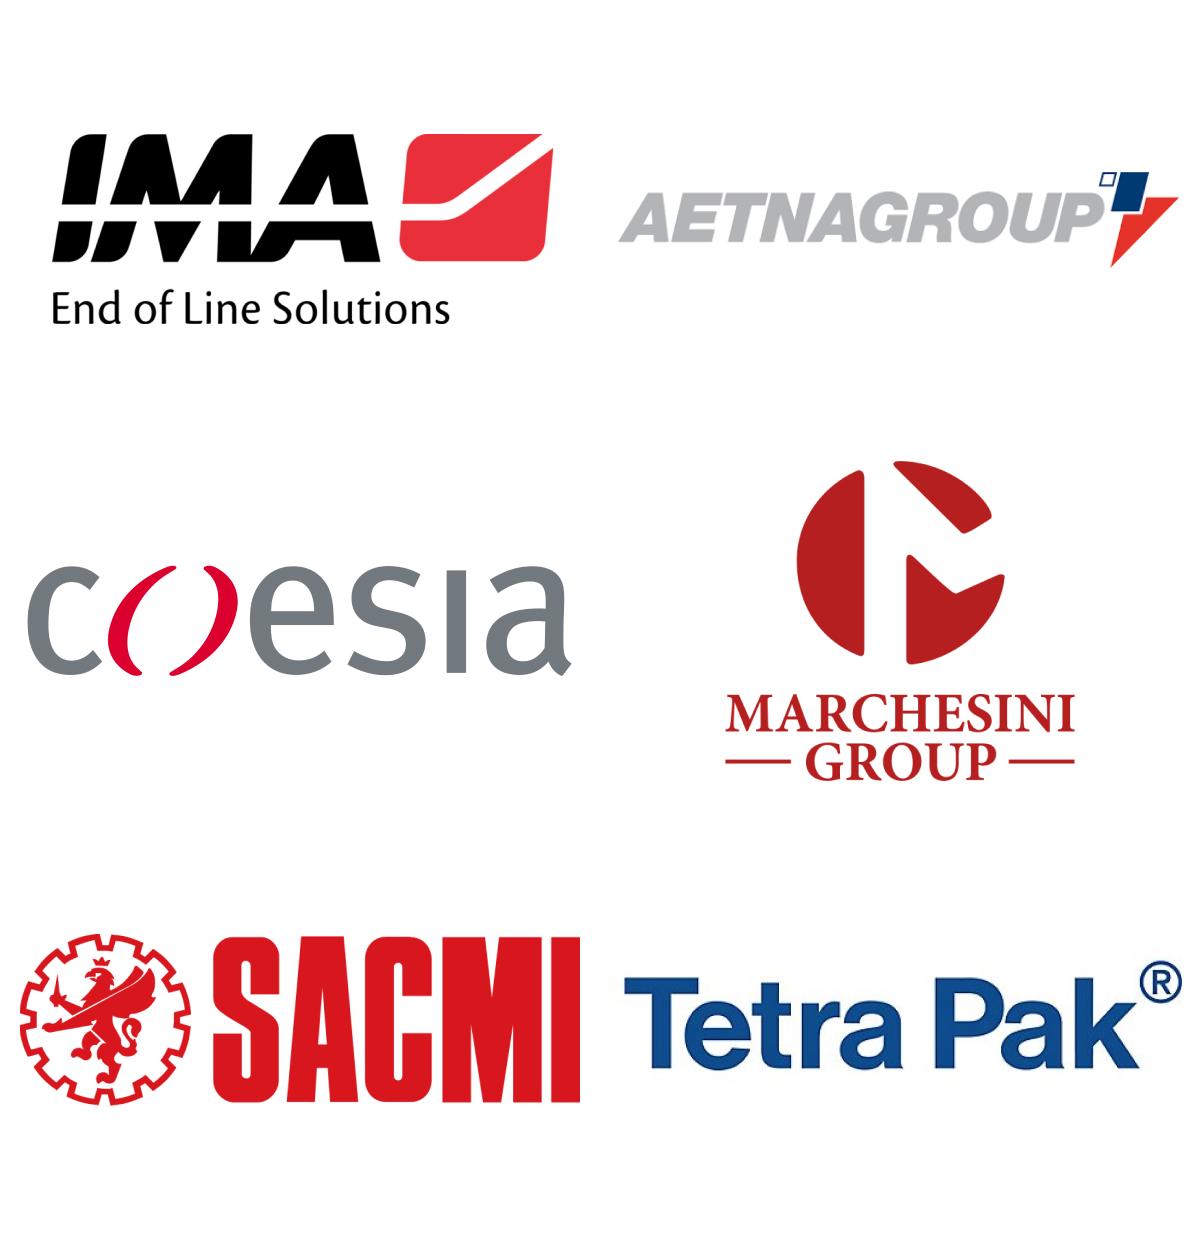 Immagini loghi top brand colonna 2: IMA End of Line Solution, AETNA, Coesia, Marchesini group, SACMI, TetraPak.